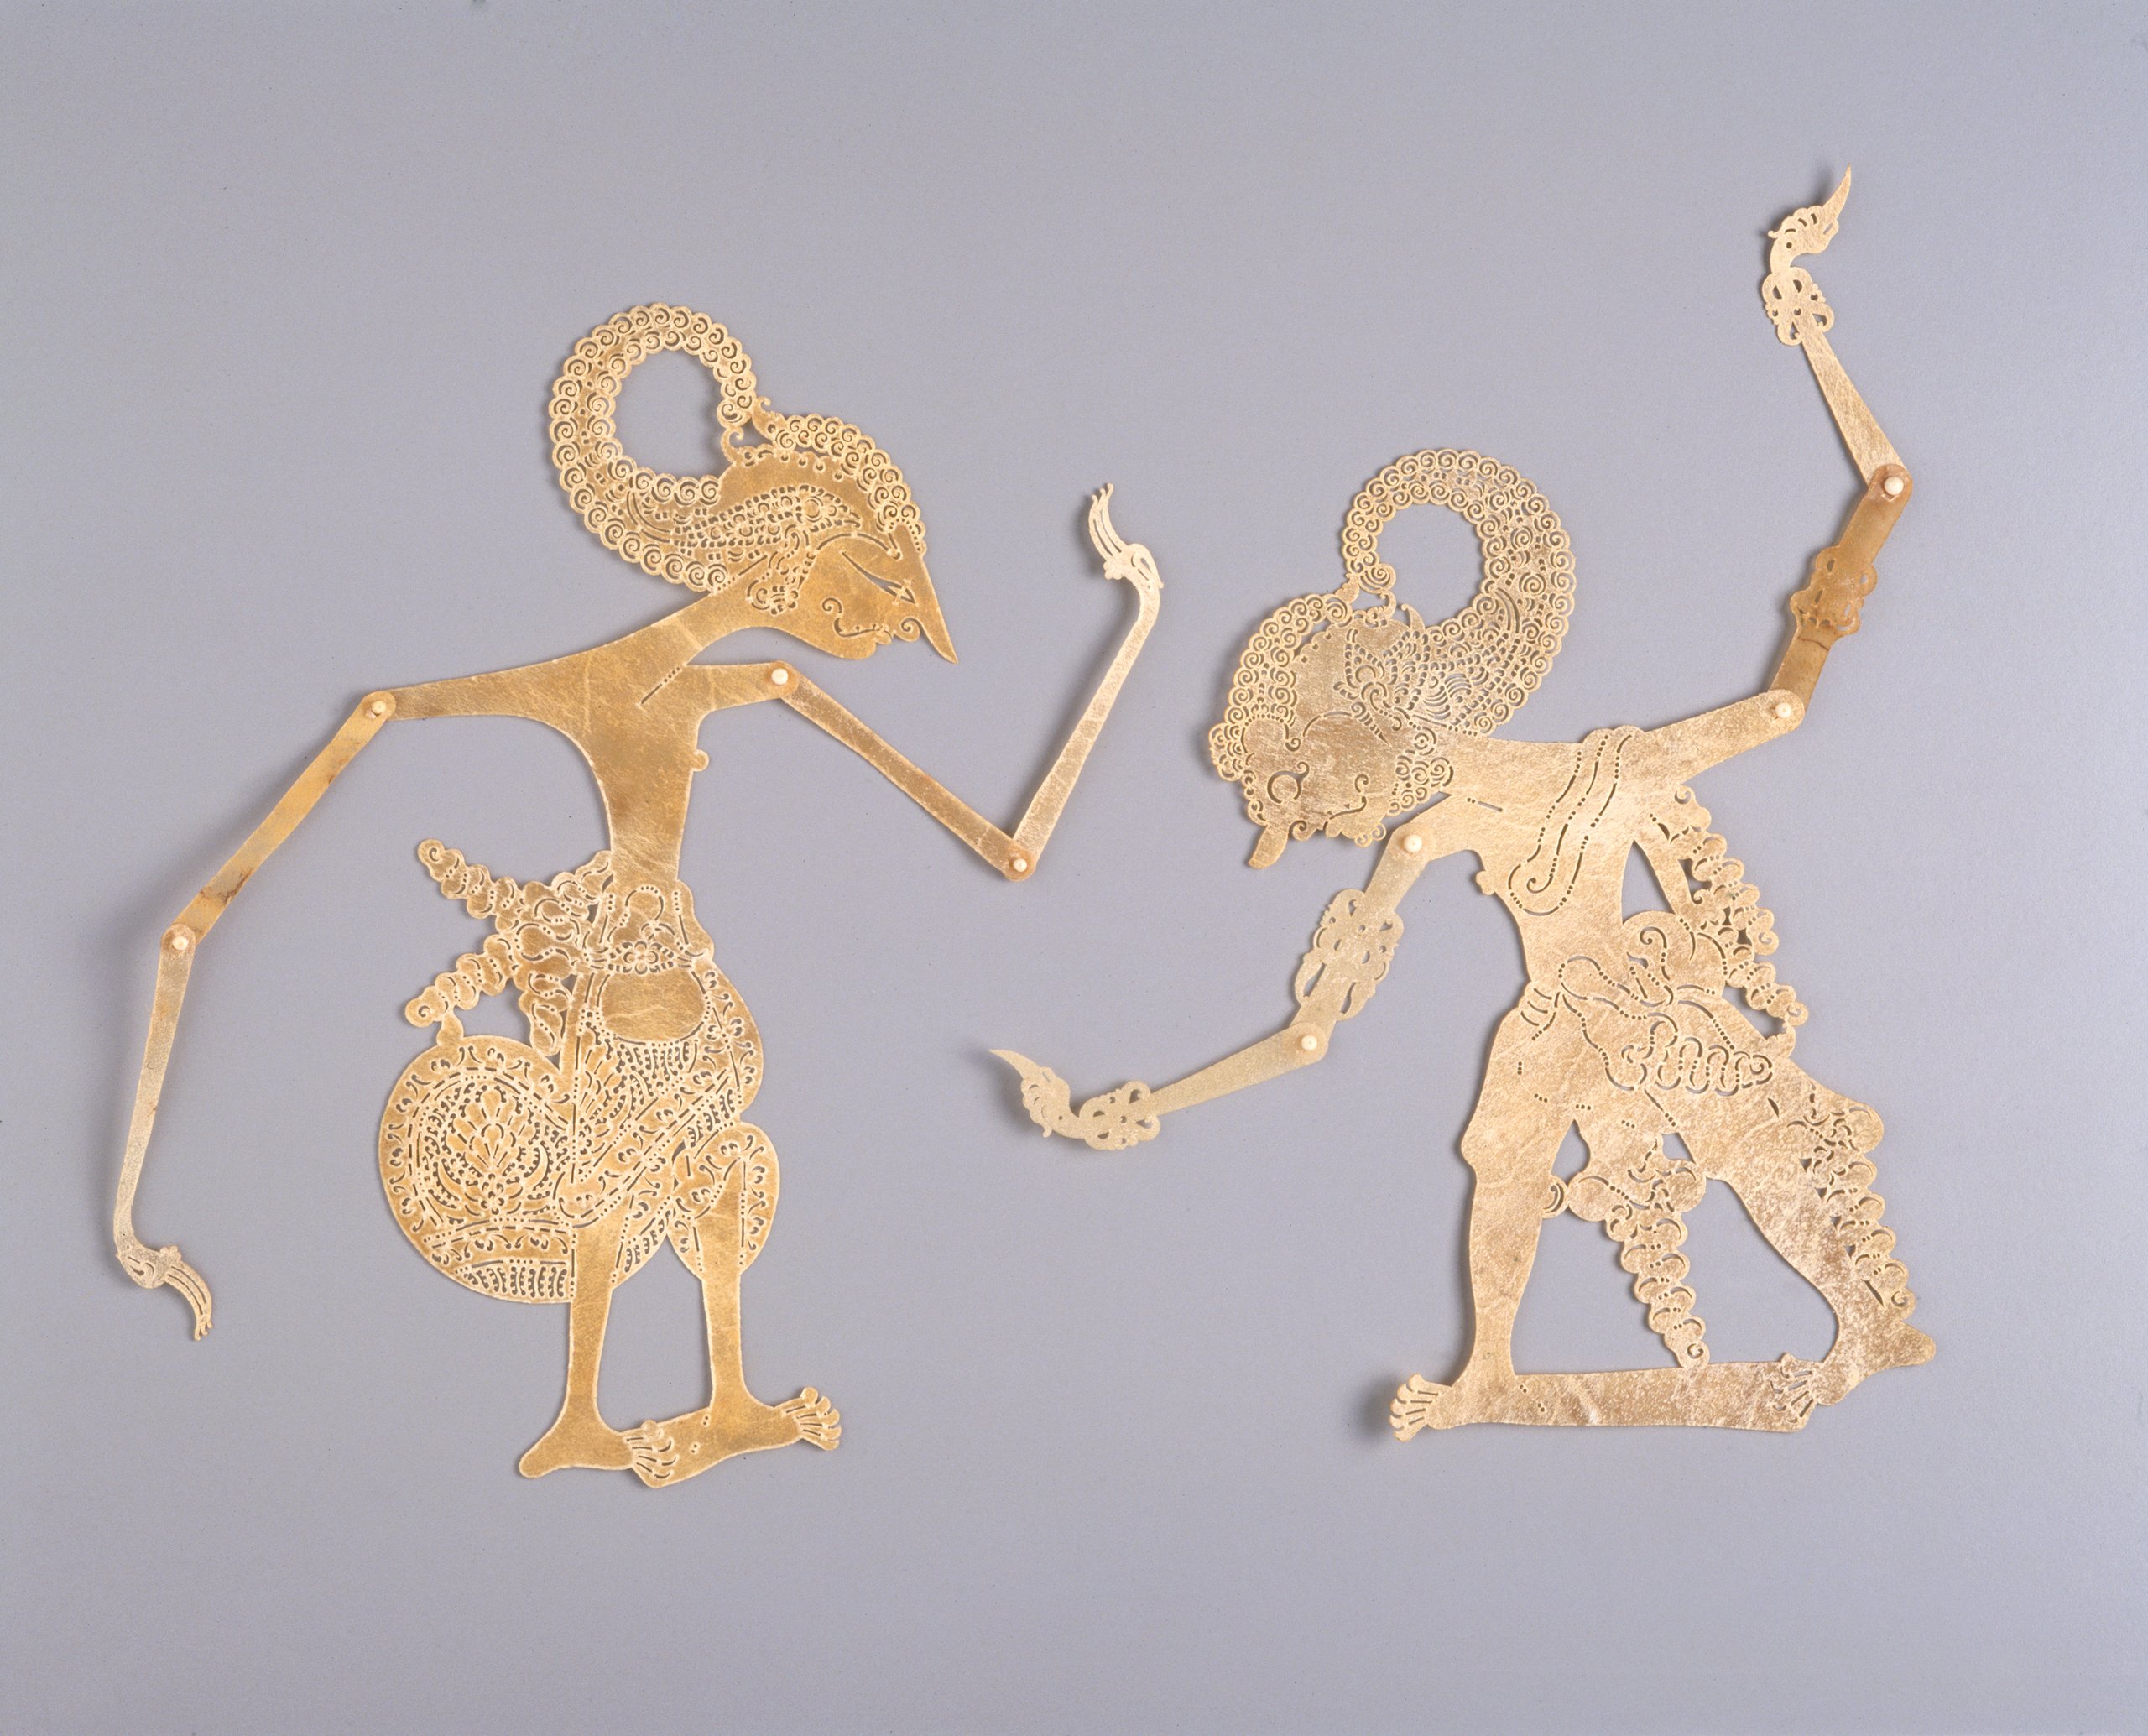 'Arjuna' and 'Bima' shadow puppets